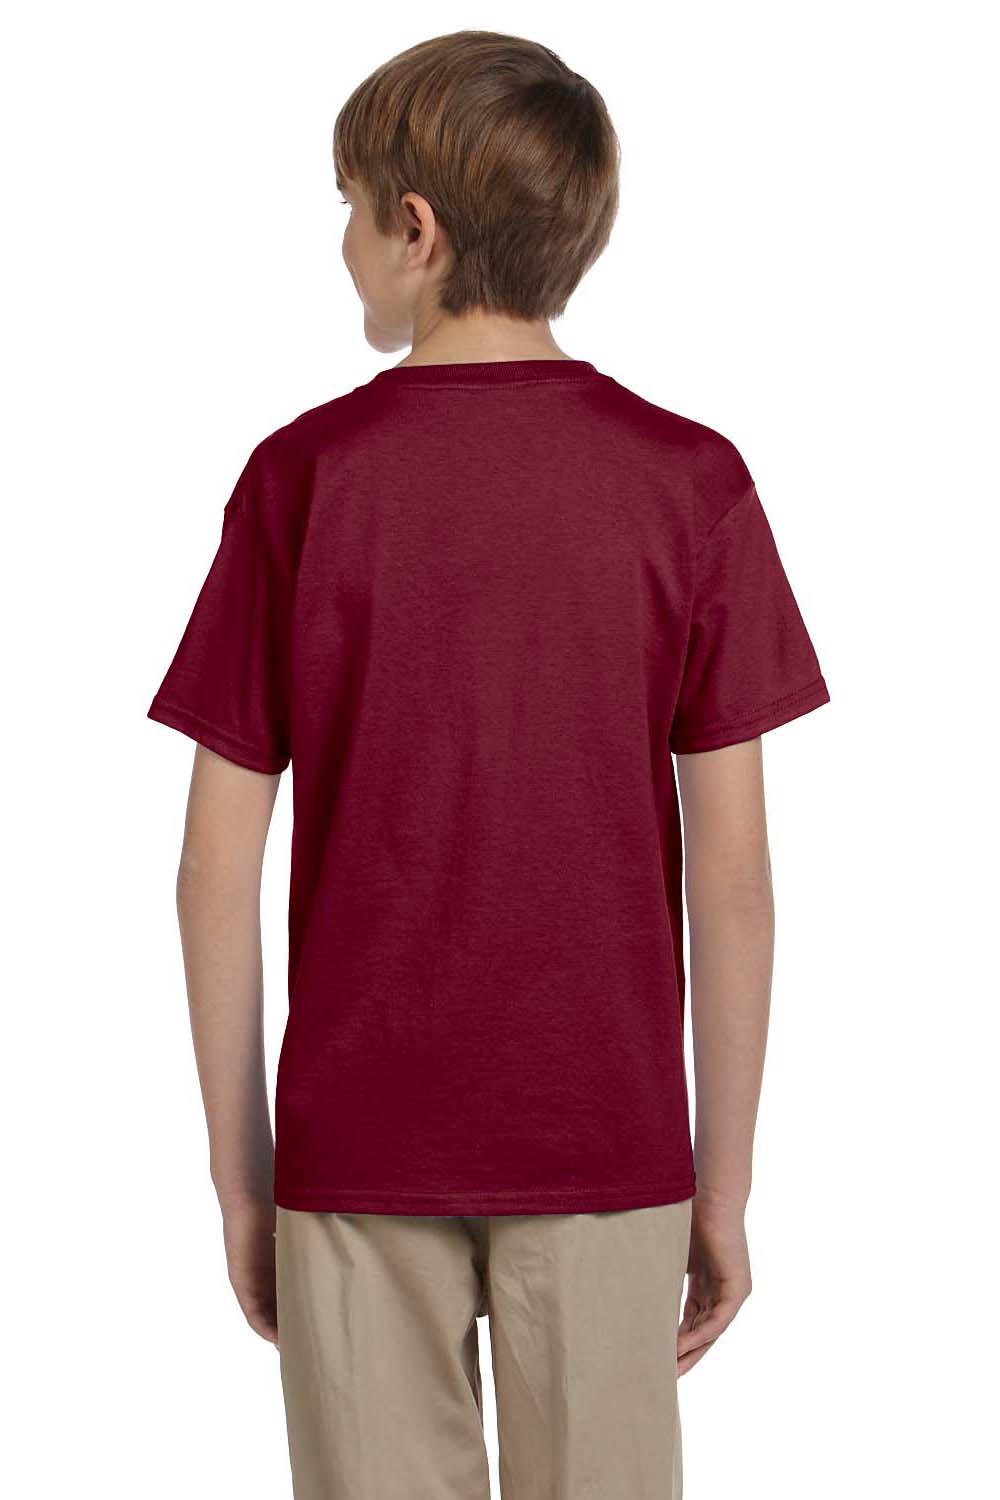 Hanes 5370 Youth EcoSmart Short Sleeve Crewneck T-Shirt Cardinal Red Back